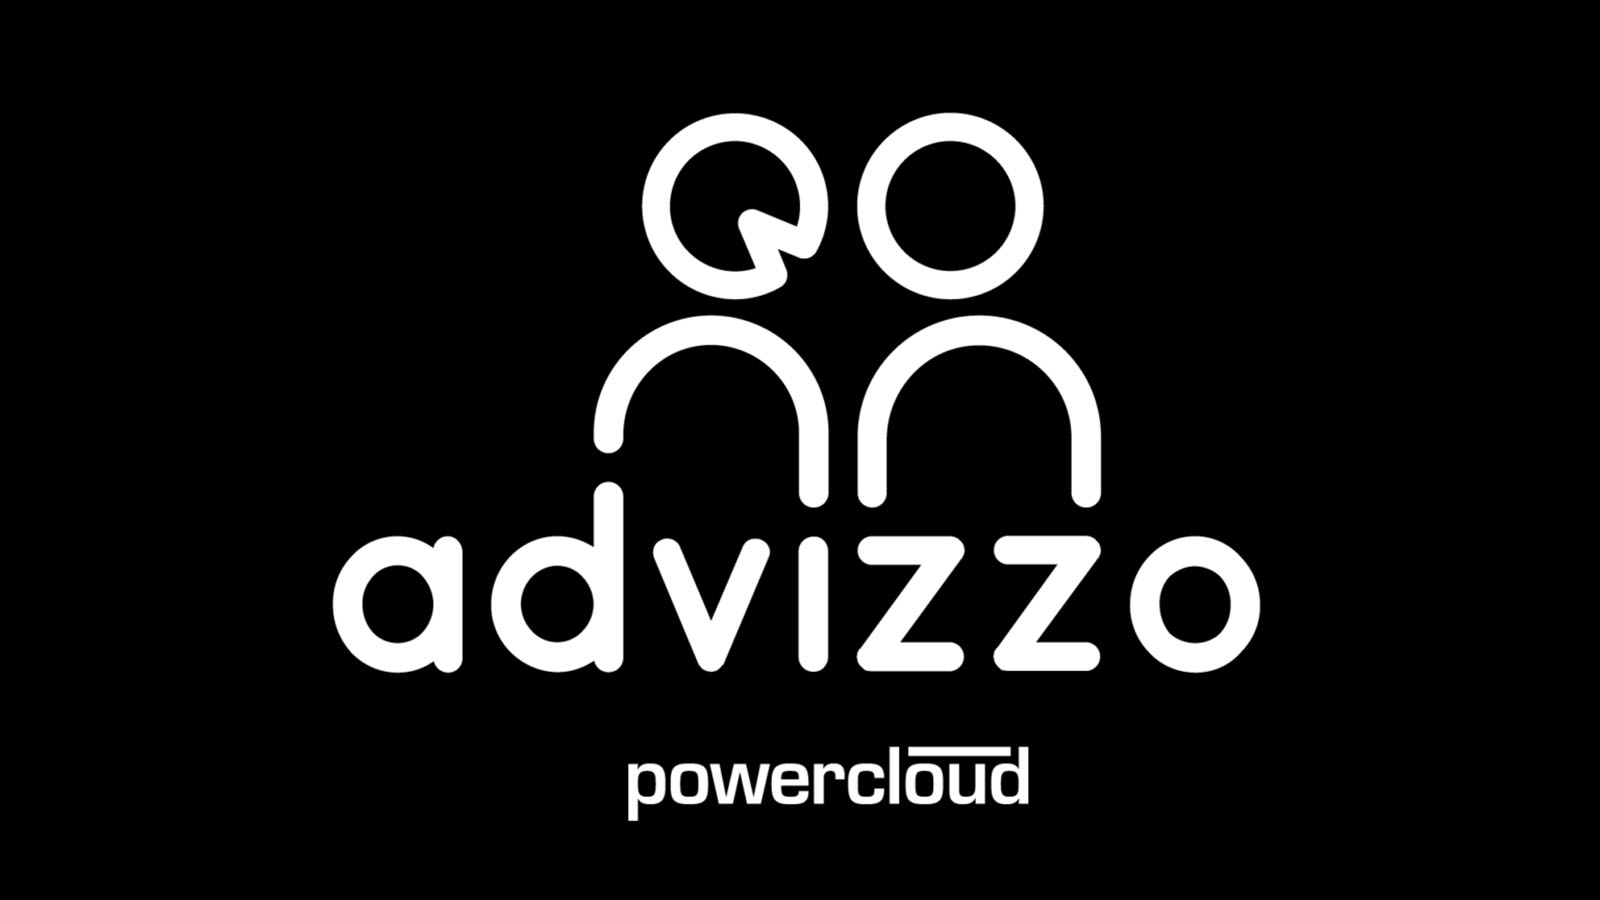 powercloud forms strategic alliance with Advizzo